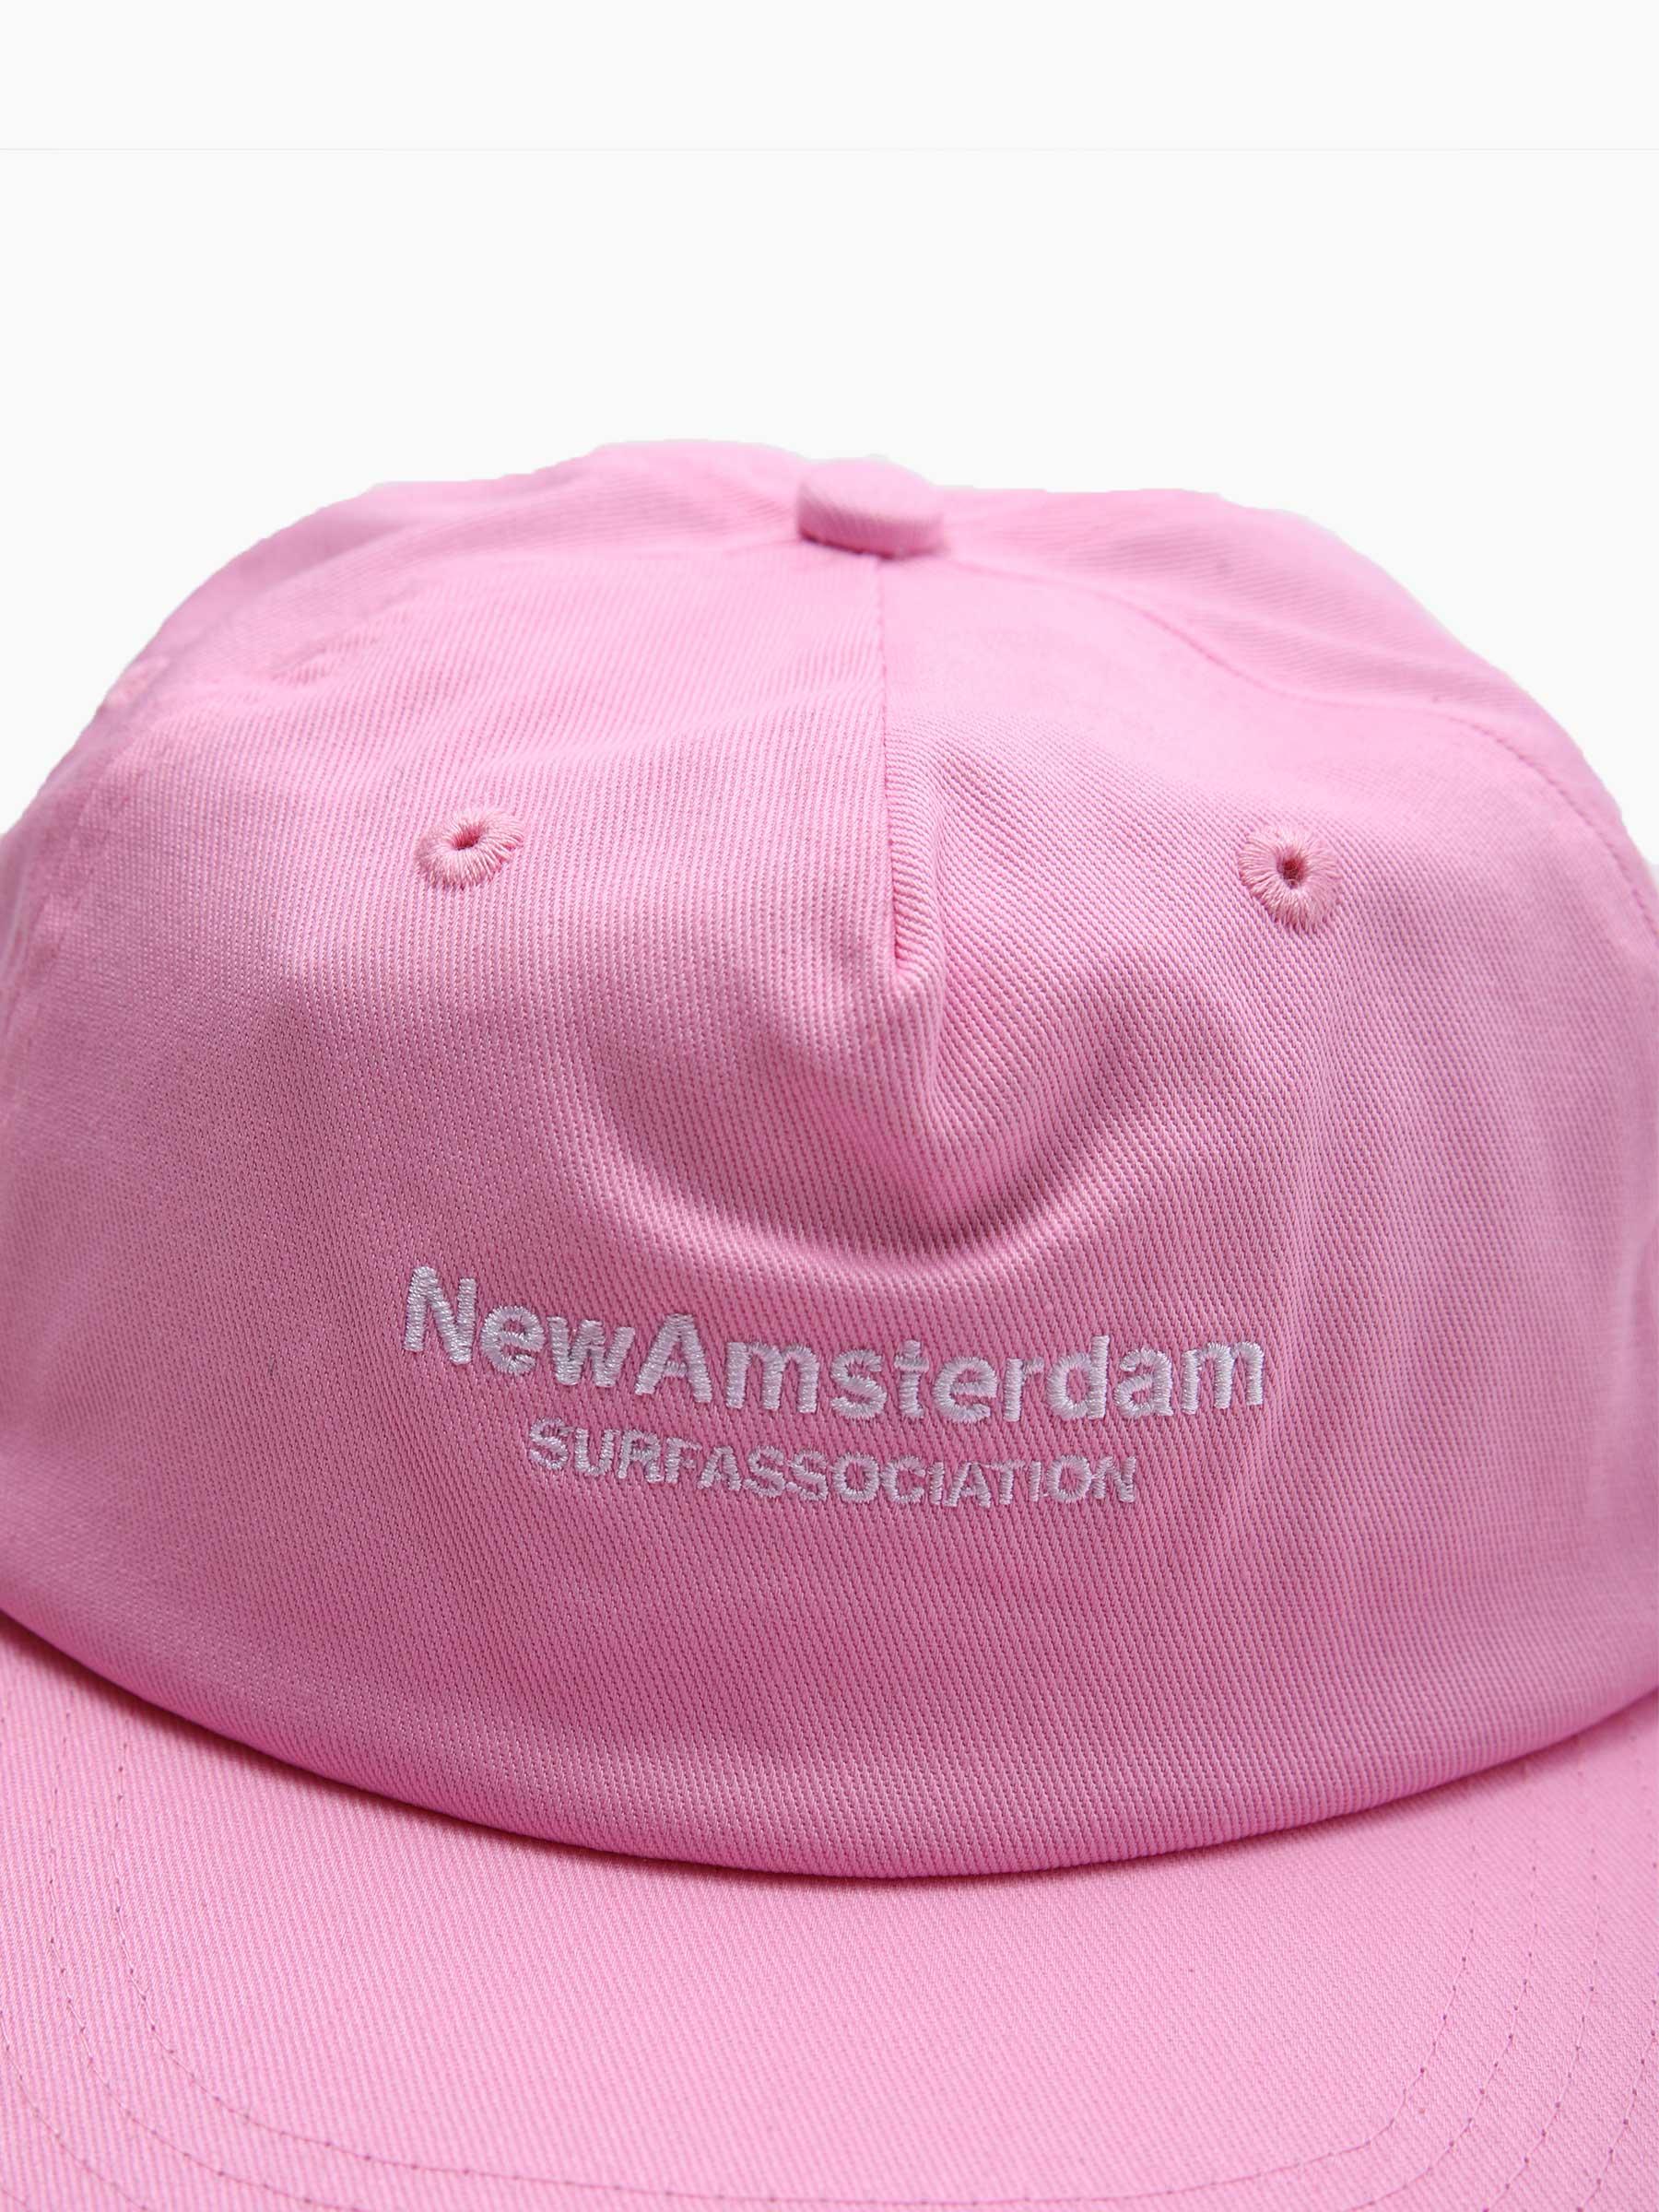 Name Cap Pink 2302098002